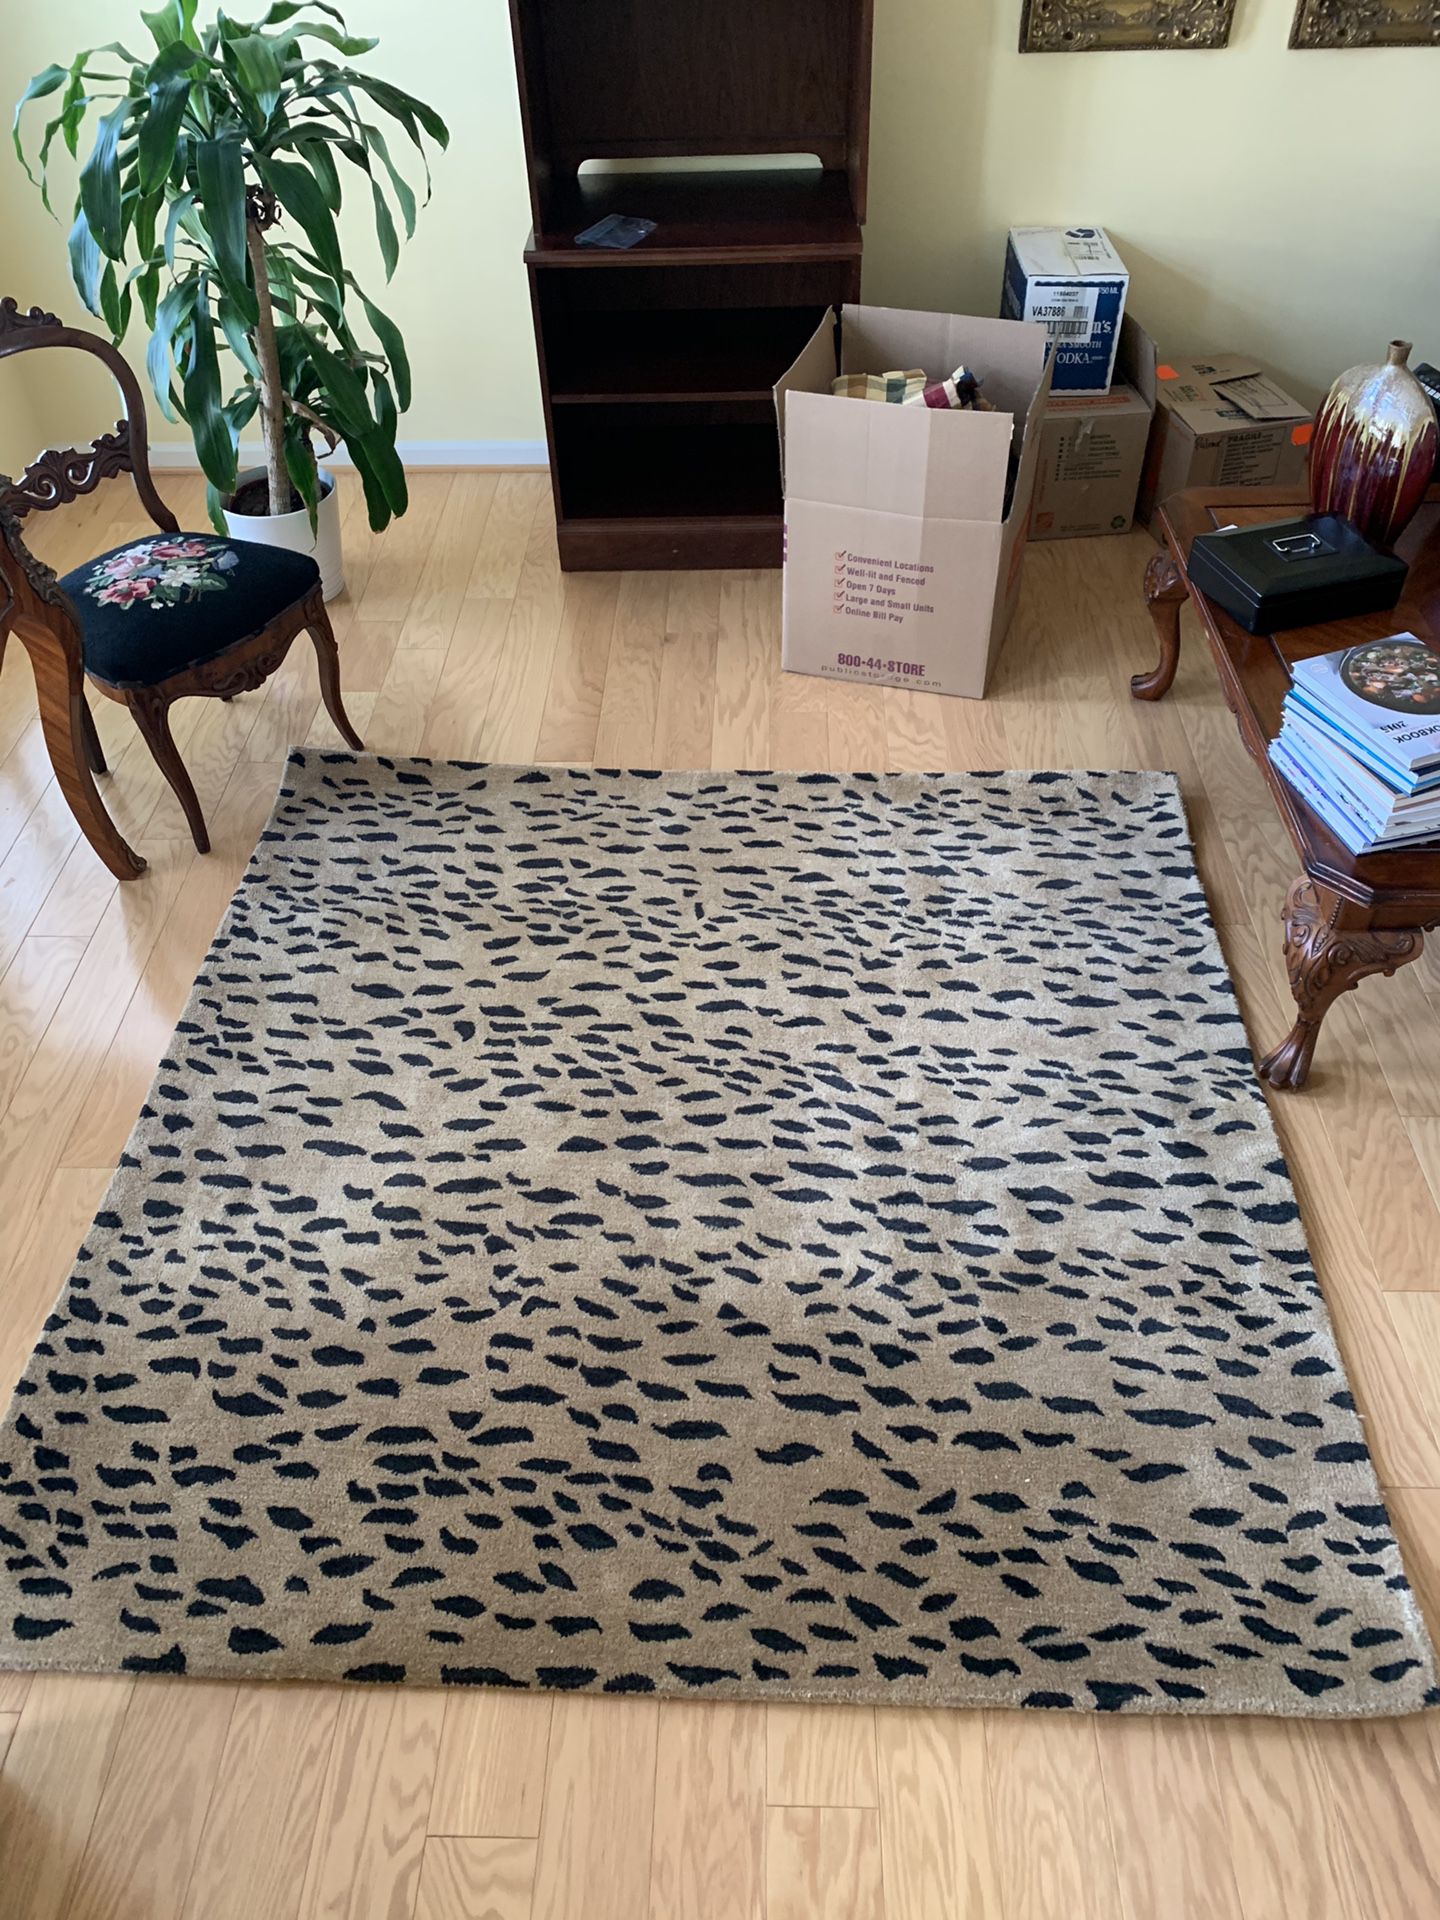 Wool Cheetah Animal Print Rug 6’ x 6’ Made in India